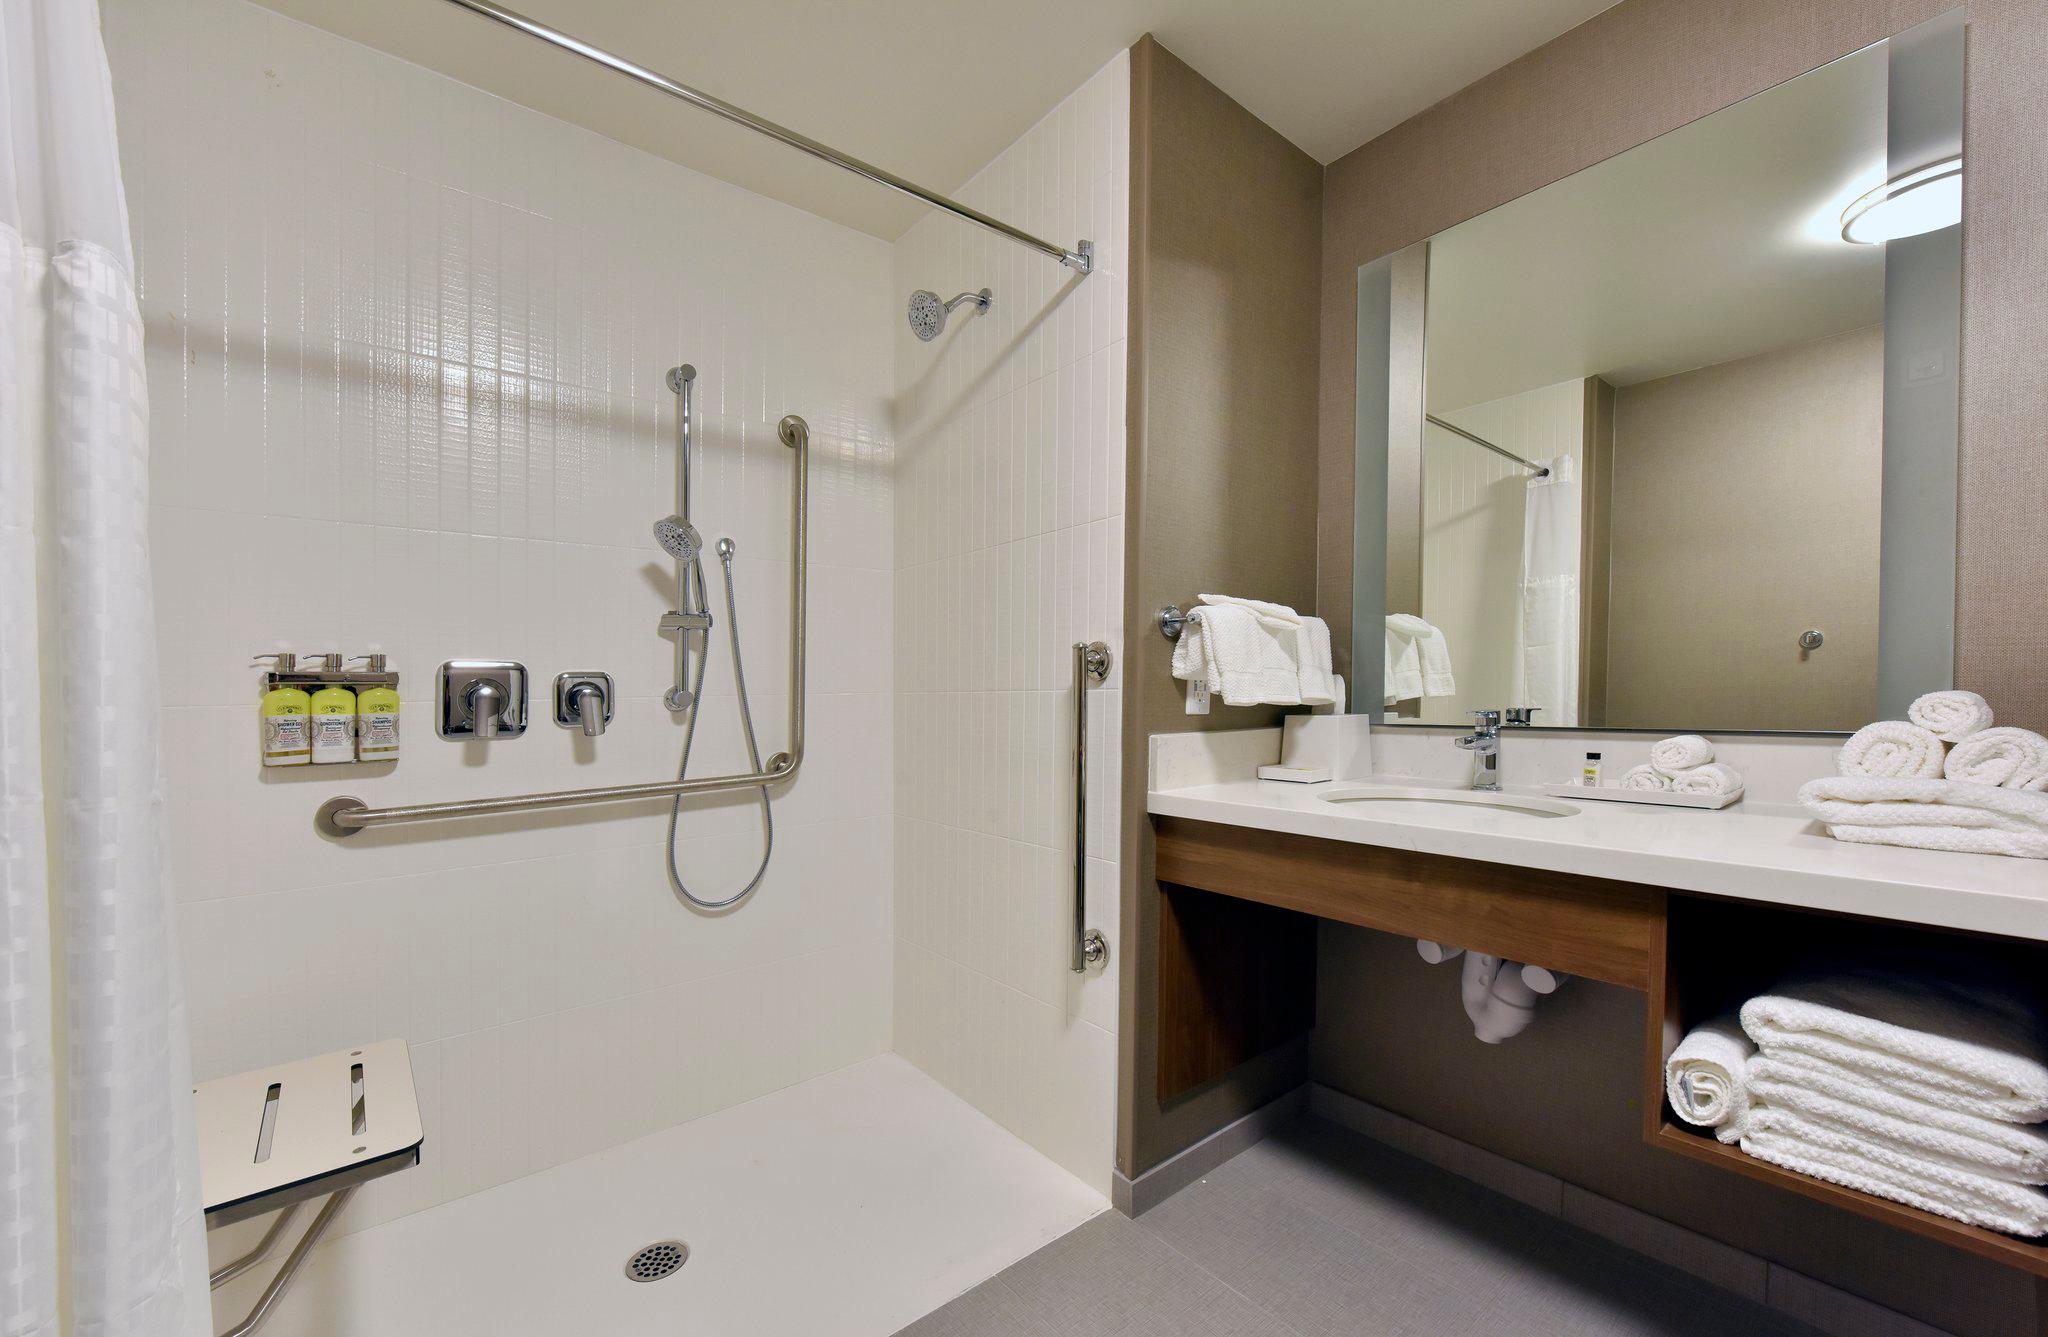 Images Staybridge Suites Waterloo - St. Jacobs Area, an IHG Hotel